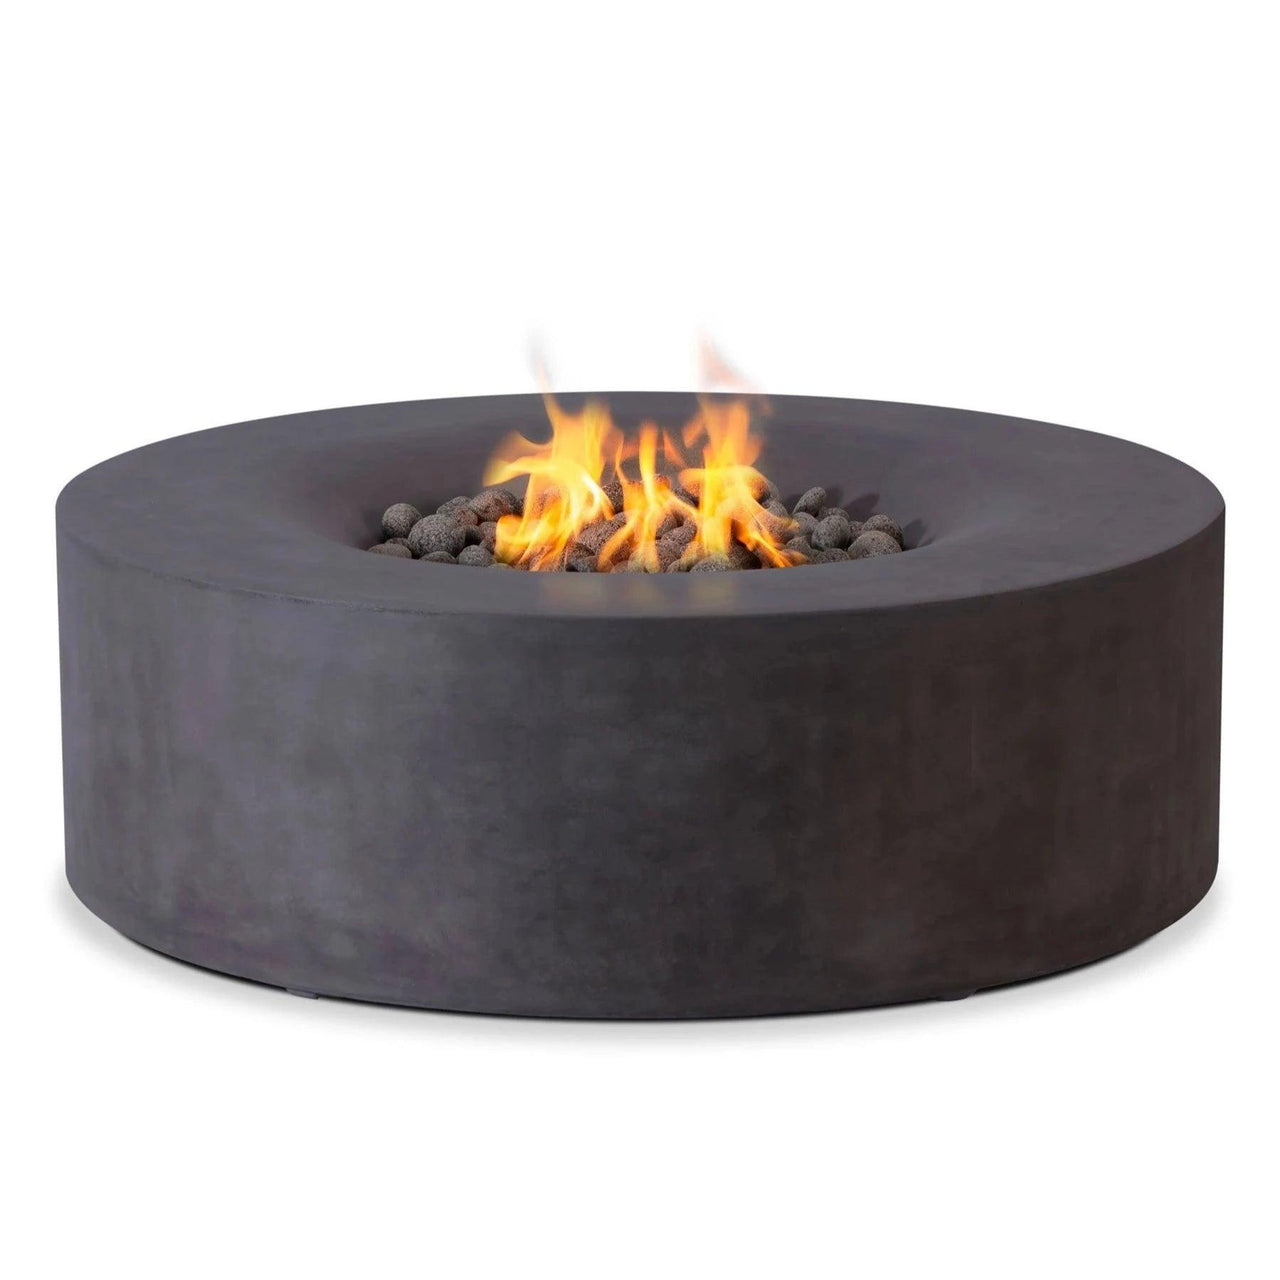 PyroMania Fire - Avalon Round Concrete Fire Pit Table - Fire Pit Stock